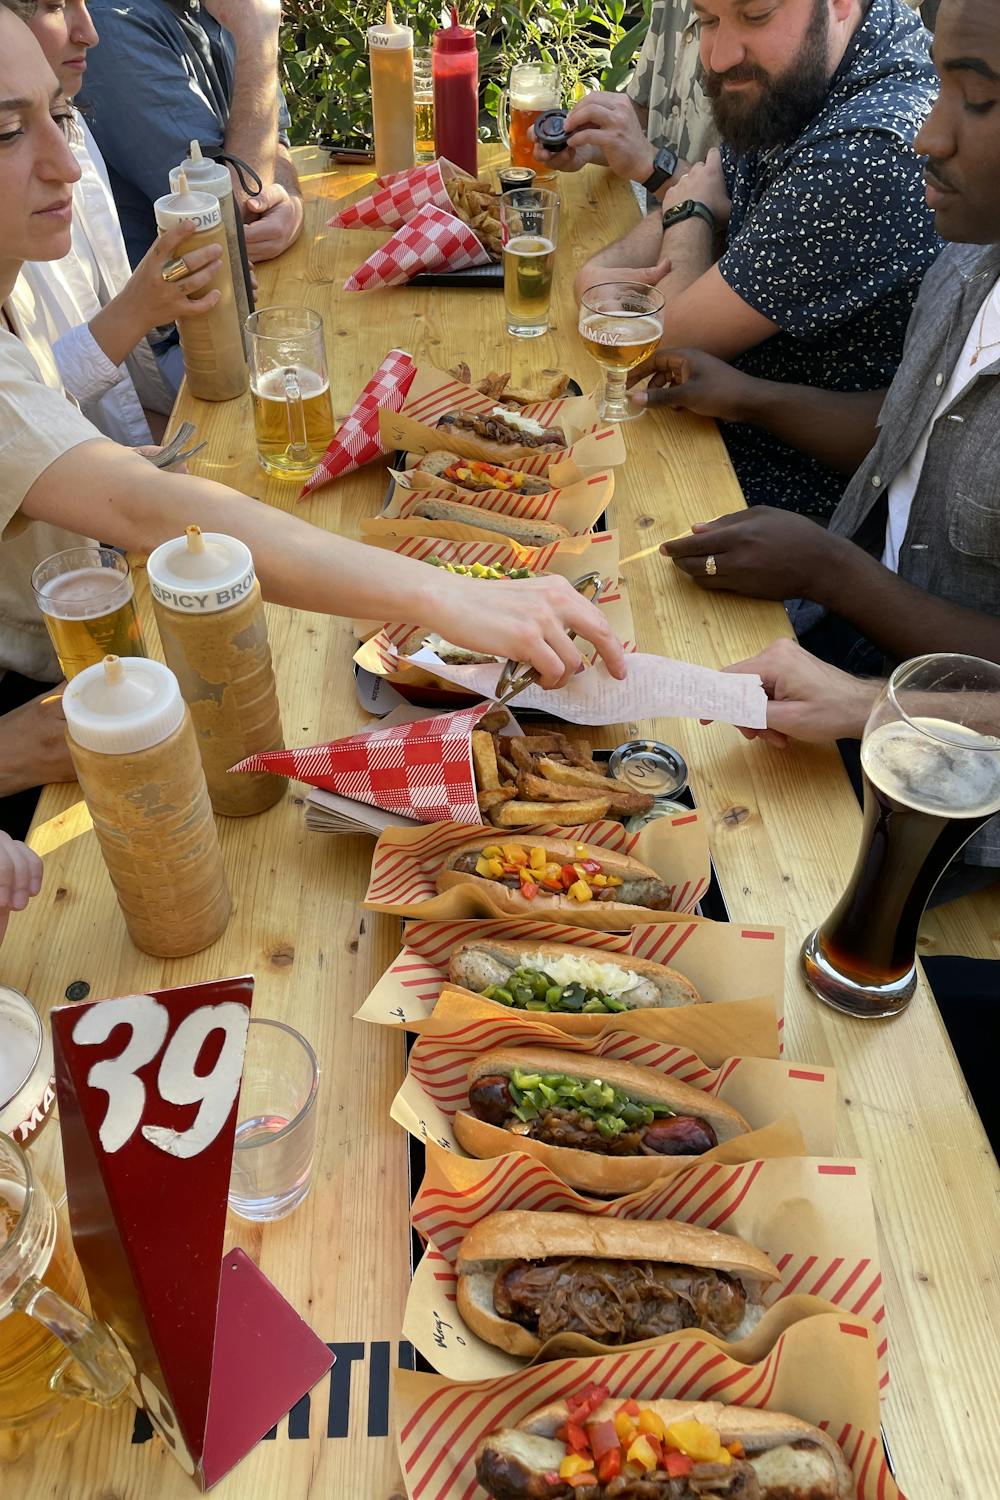 Many hotdogs on a table